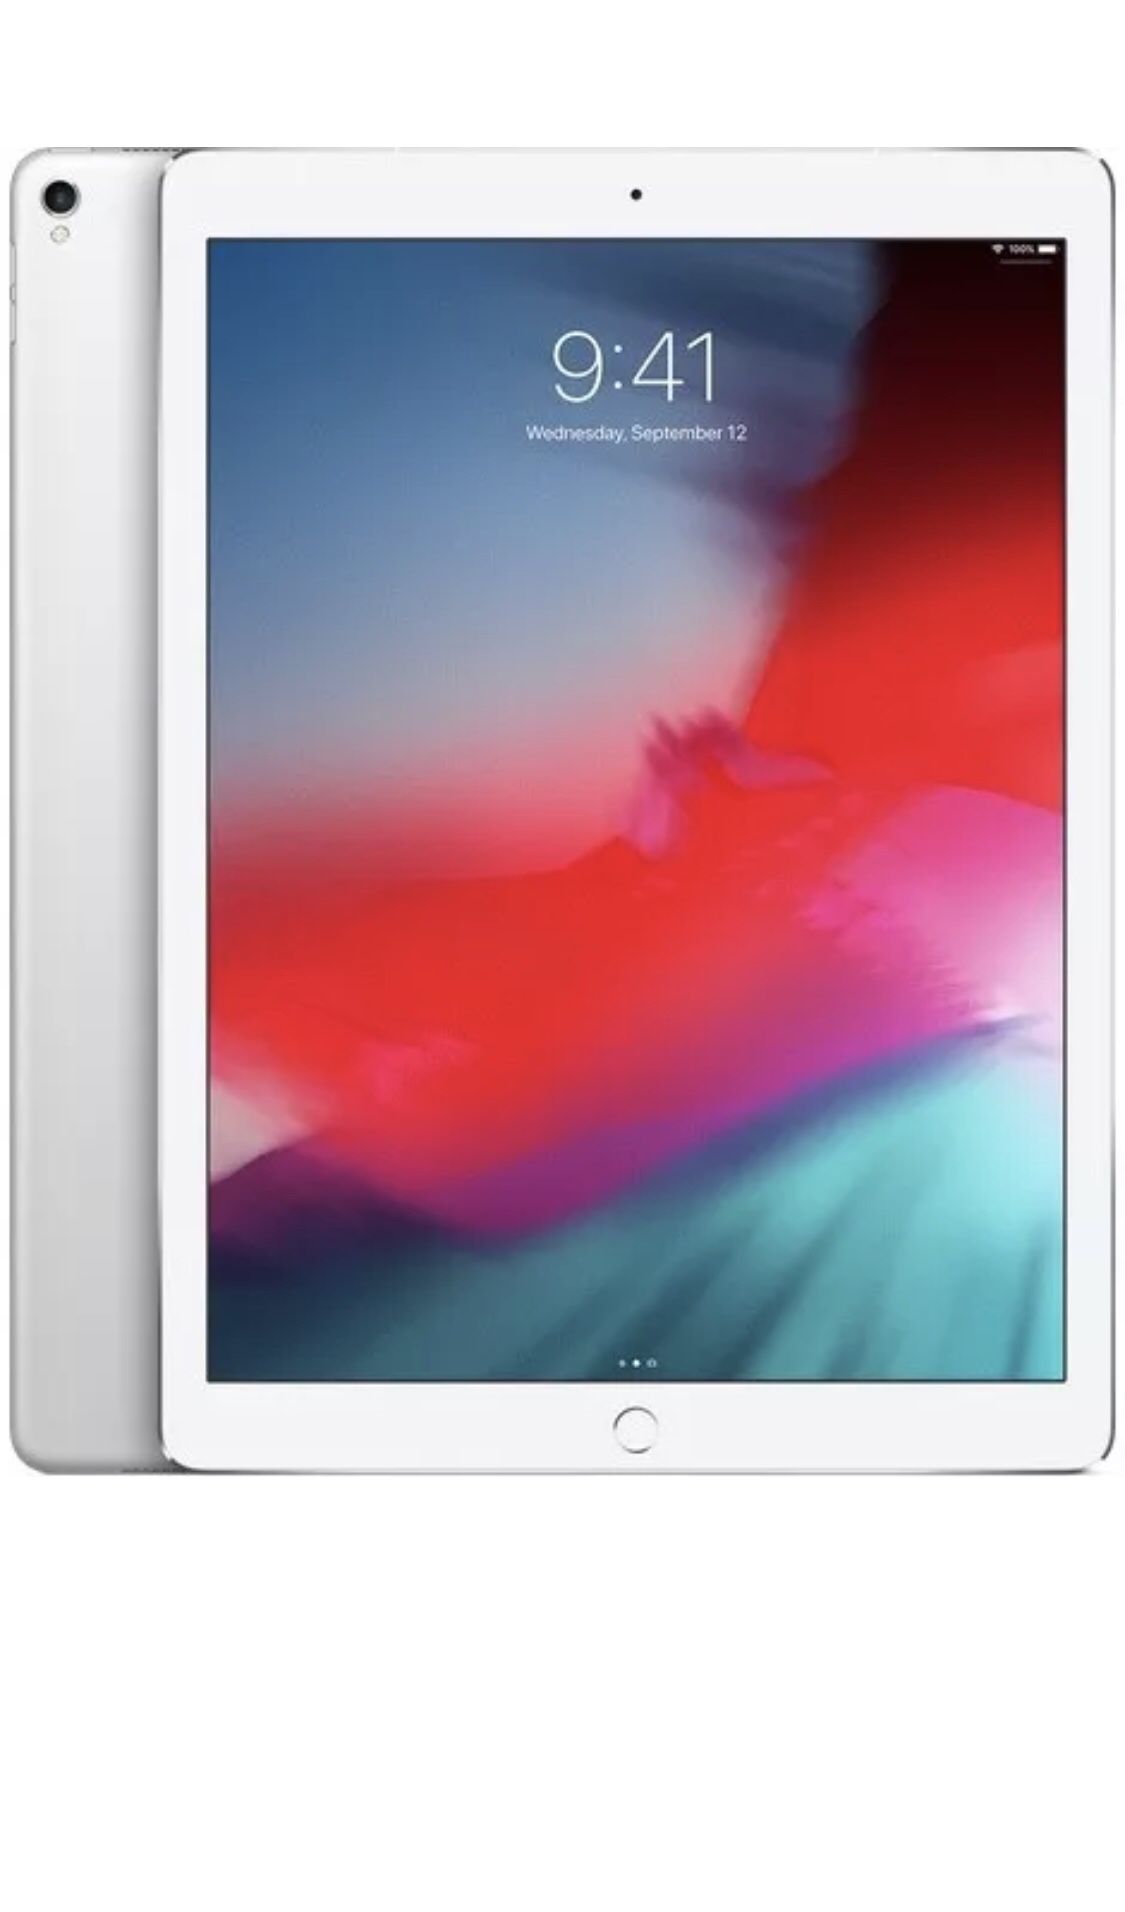 LIKE NEW! 12.9-inch iPad Pro — Silver / 64GB / WiFi + Cellular